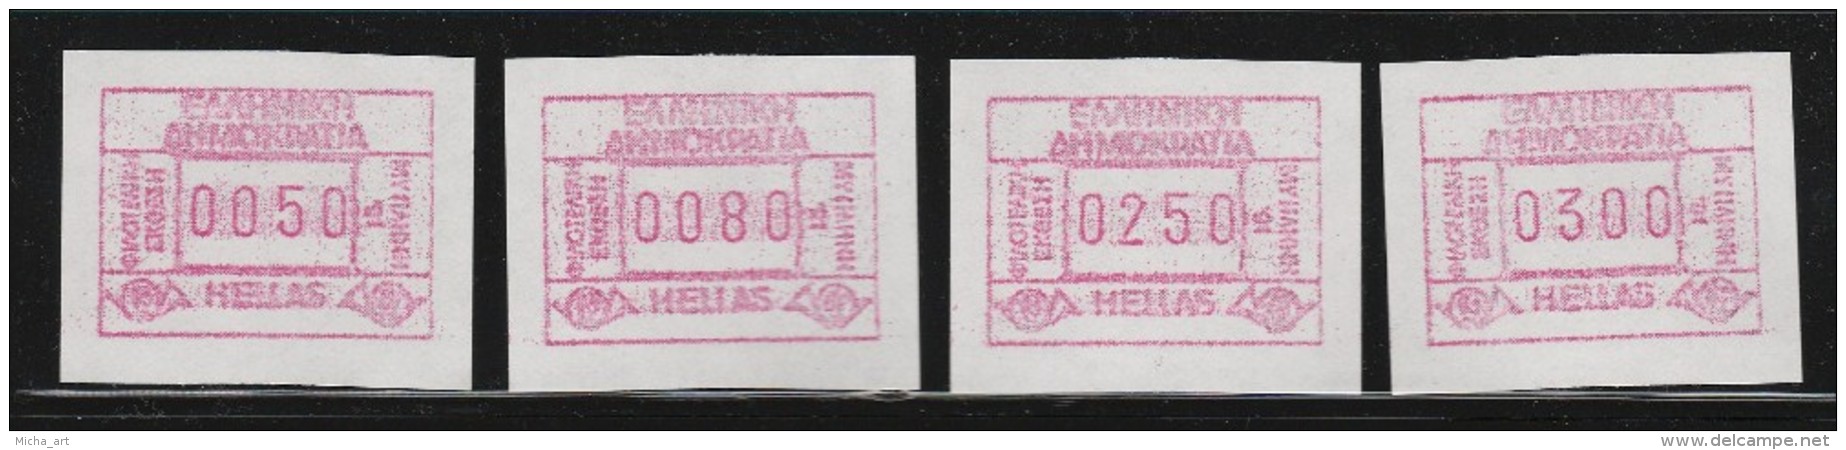 (&#914;327-5) Greece 1991 ATM Frama Philatelic Exhibition Of Mytilene ´91 - Viñetas De Franqueo [ATM]